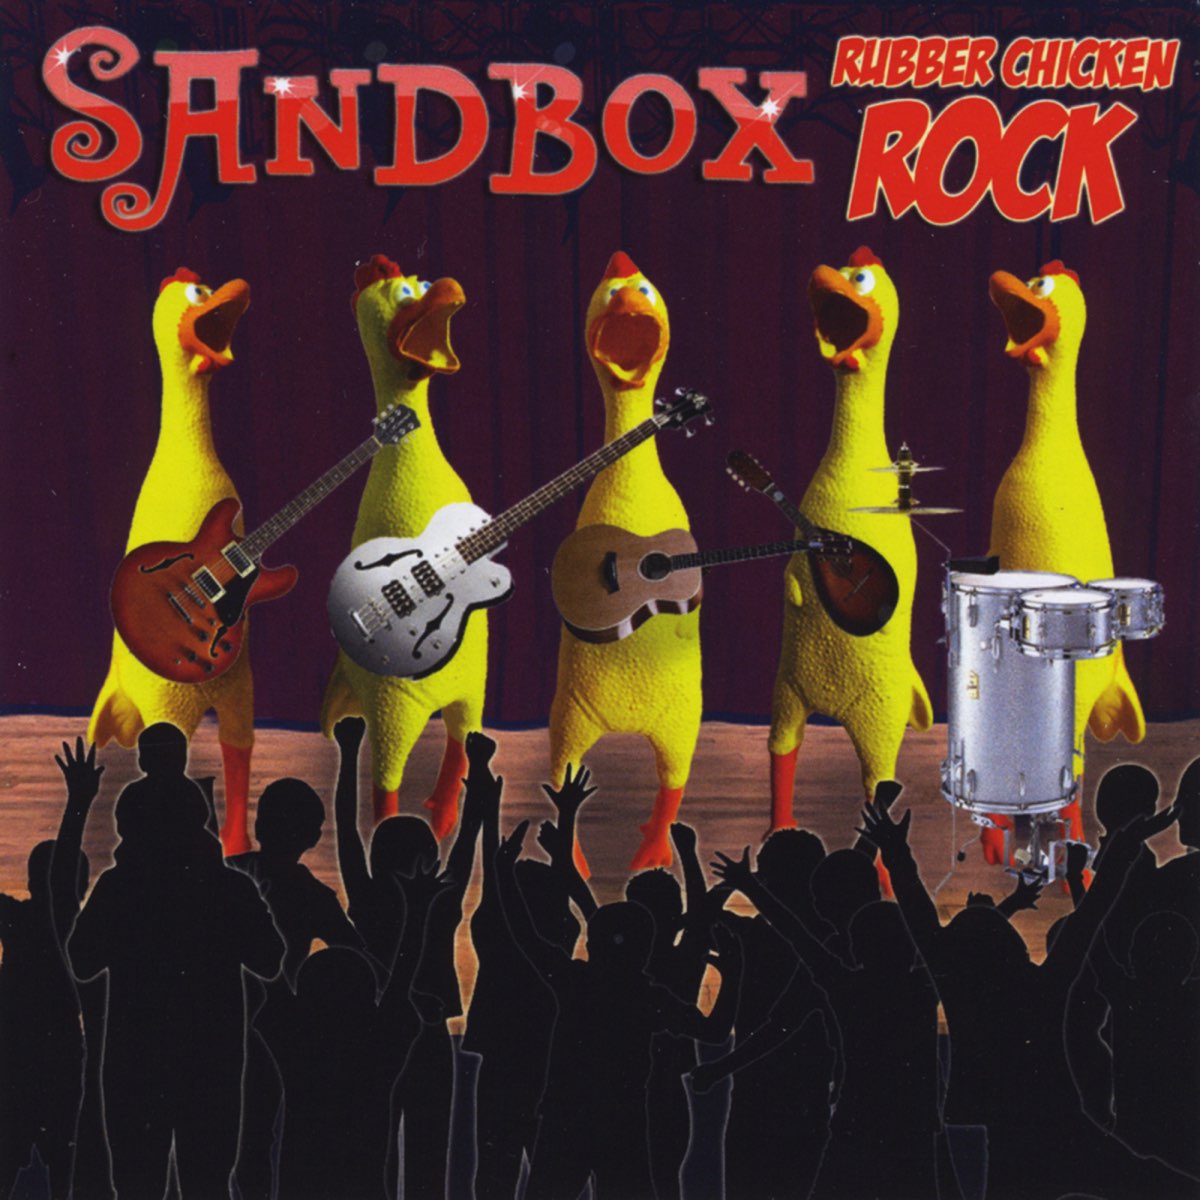 Rubber Chicken Rock by Sandbox on Apple Music